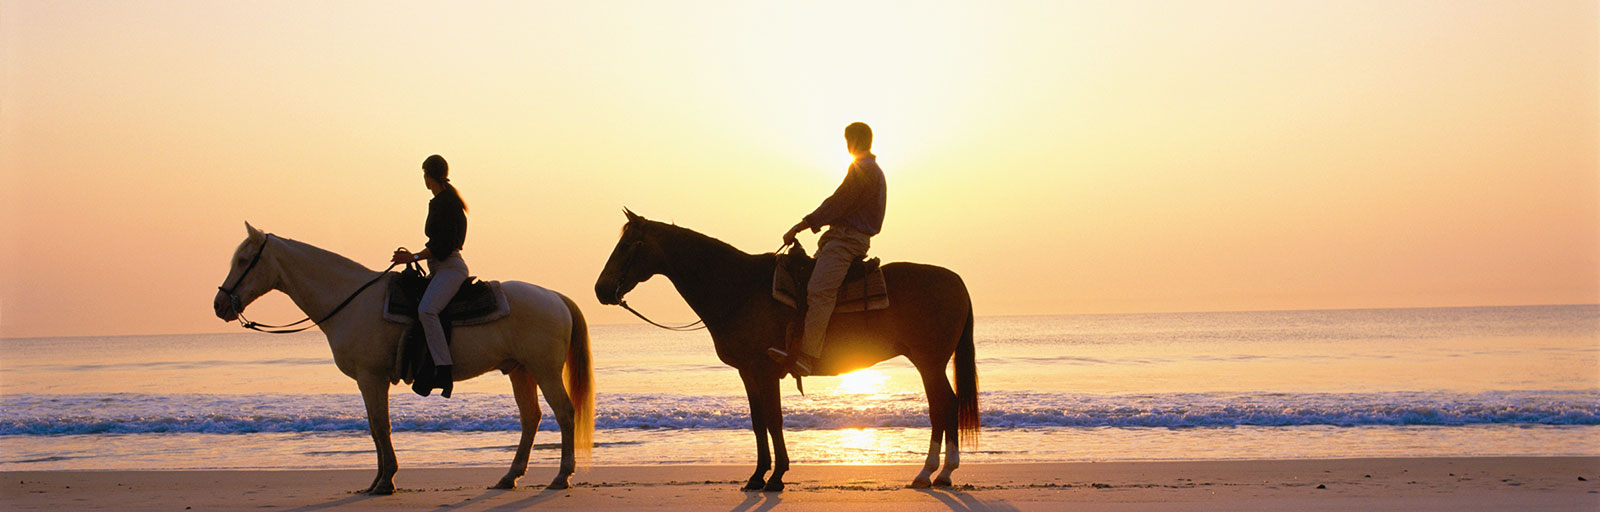 Horseback Riding & Yoga Retreat in Mexico: Sunset on the Beach